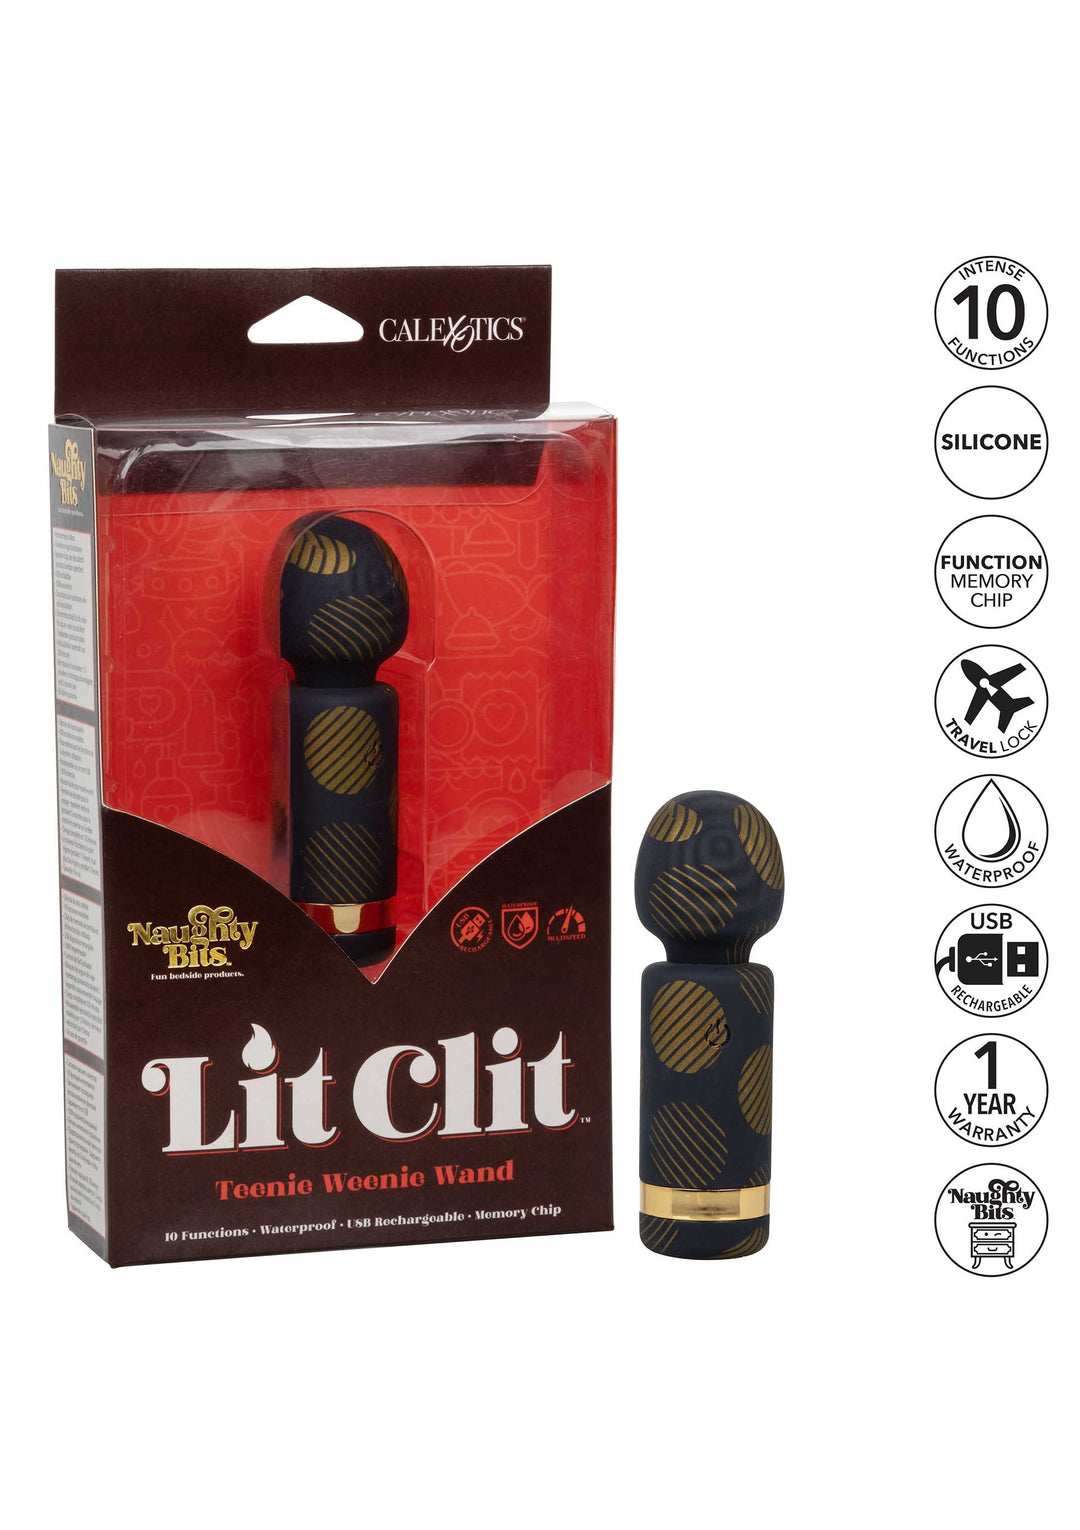 Lit Clit vibrator calexotics